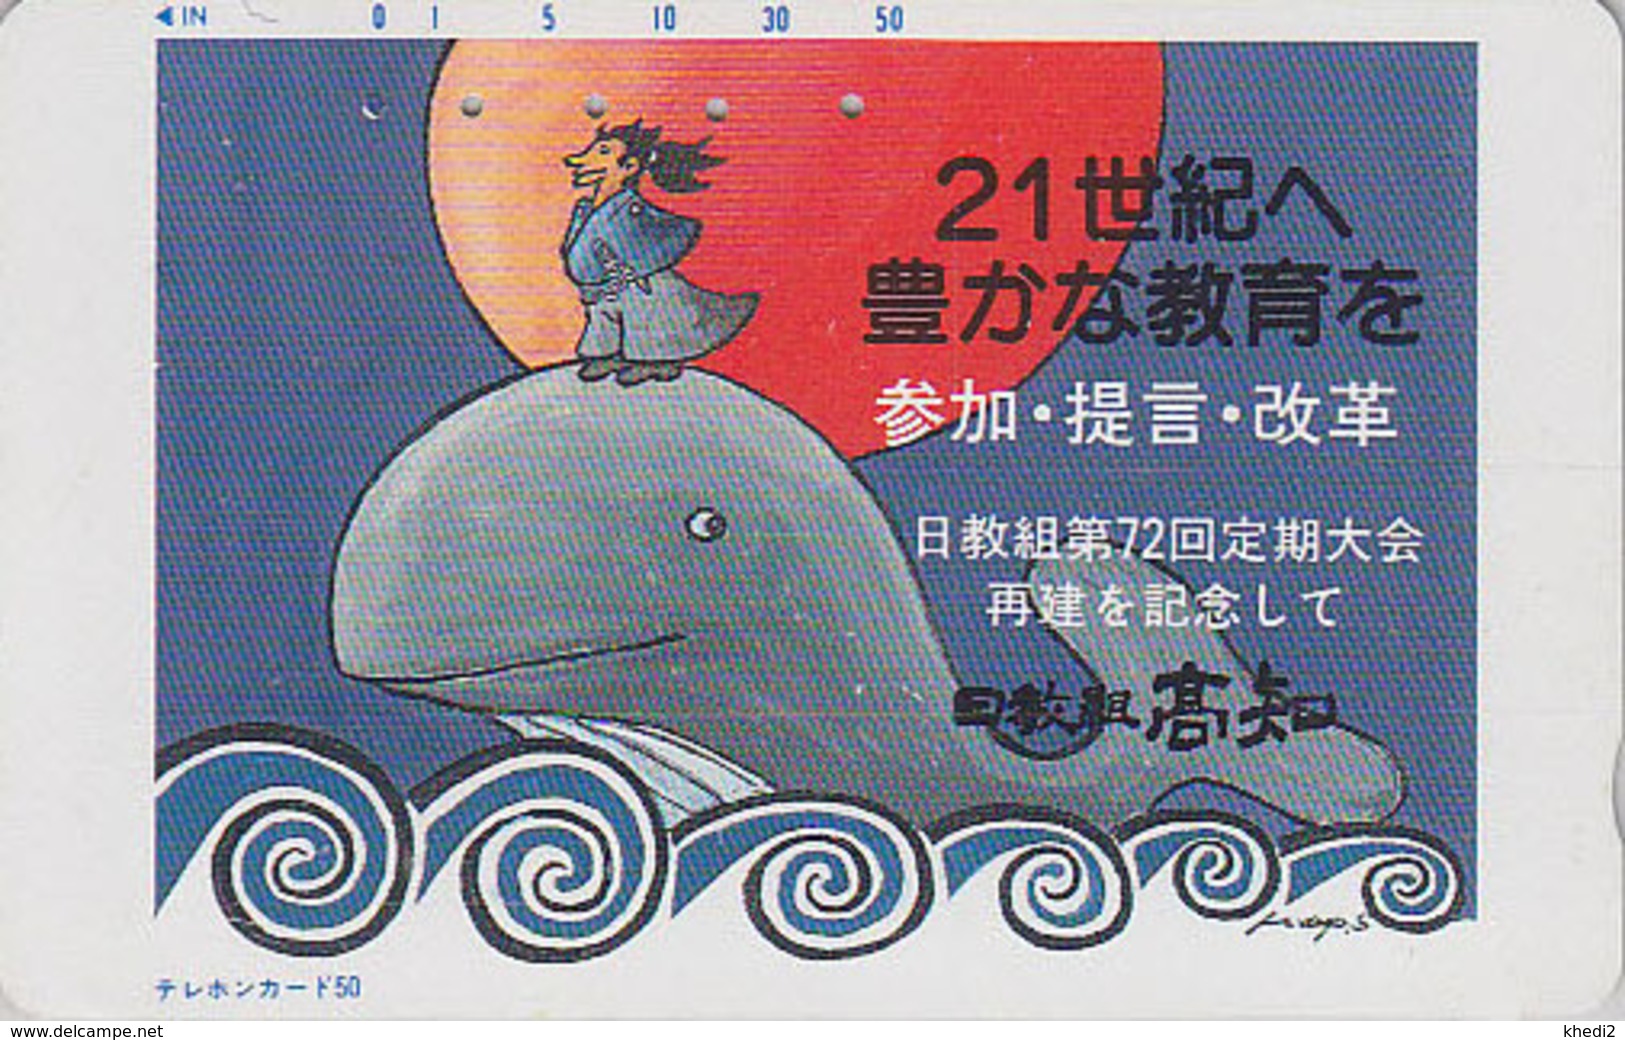 Télécarte Japon / 330-30220 - ANIMAL - BALEINE - WHALE & SUNSET Japan Phonecard - WAL Telefonkarte - Comics - 460 - Delphine